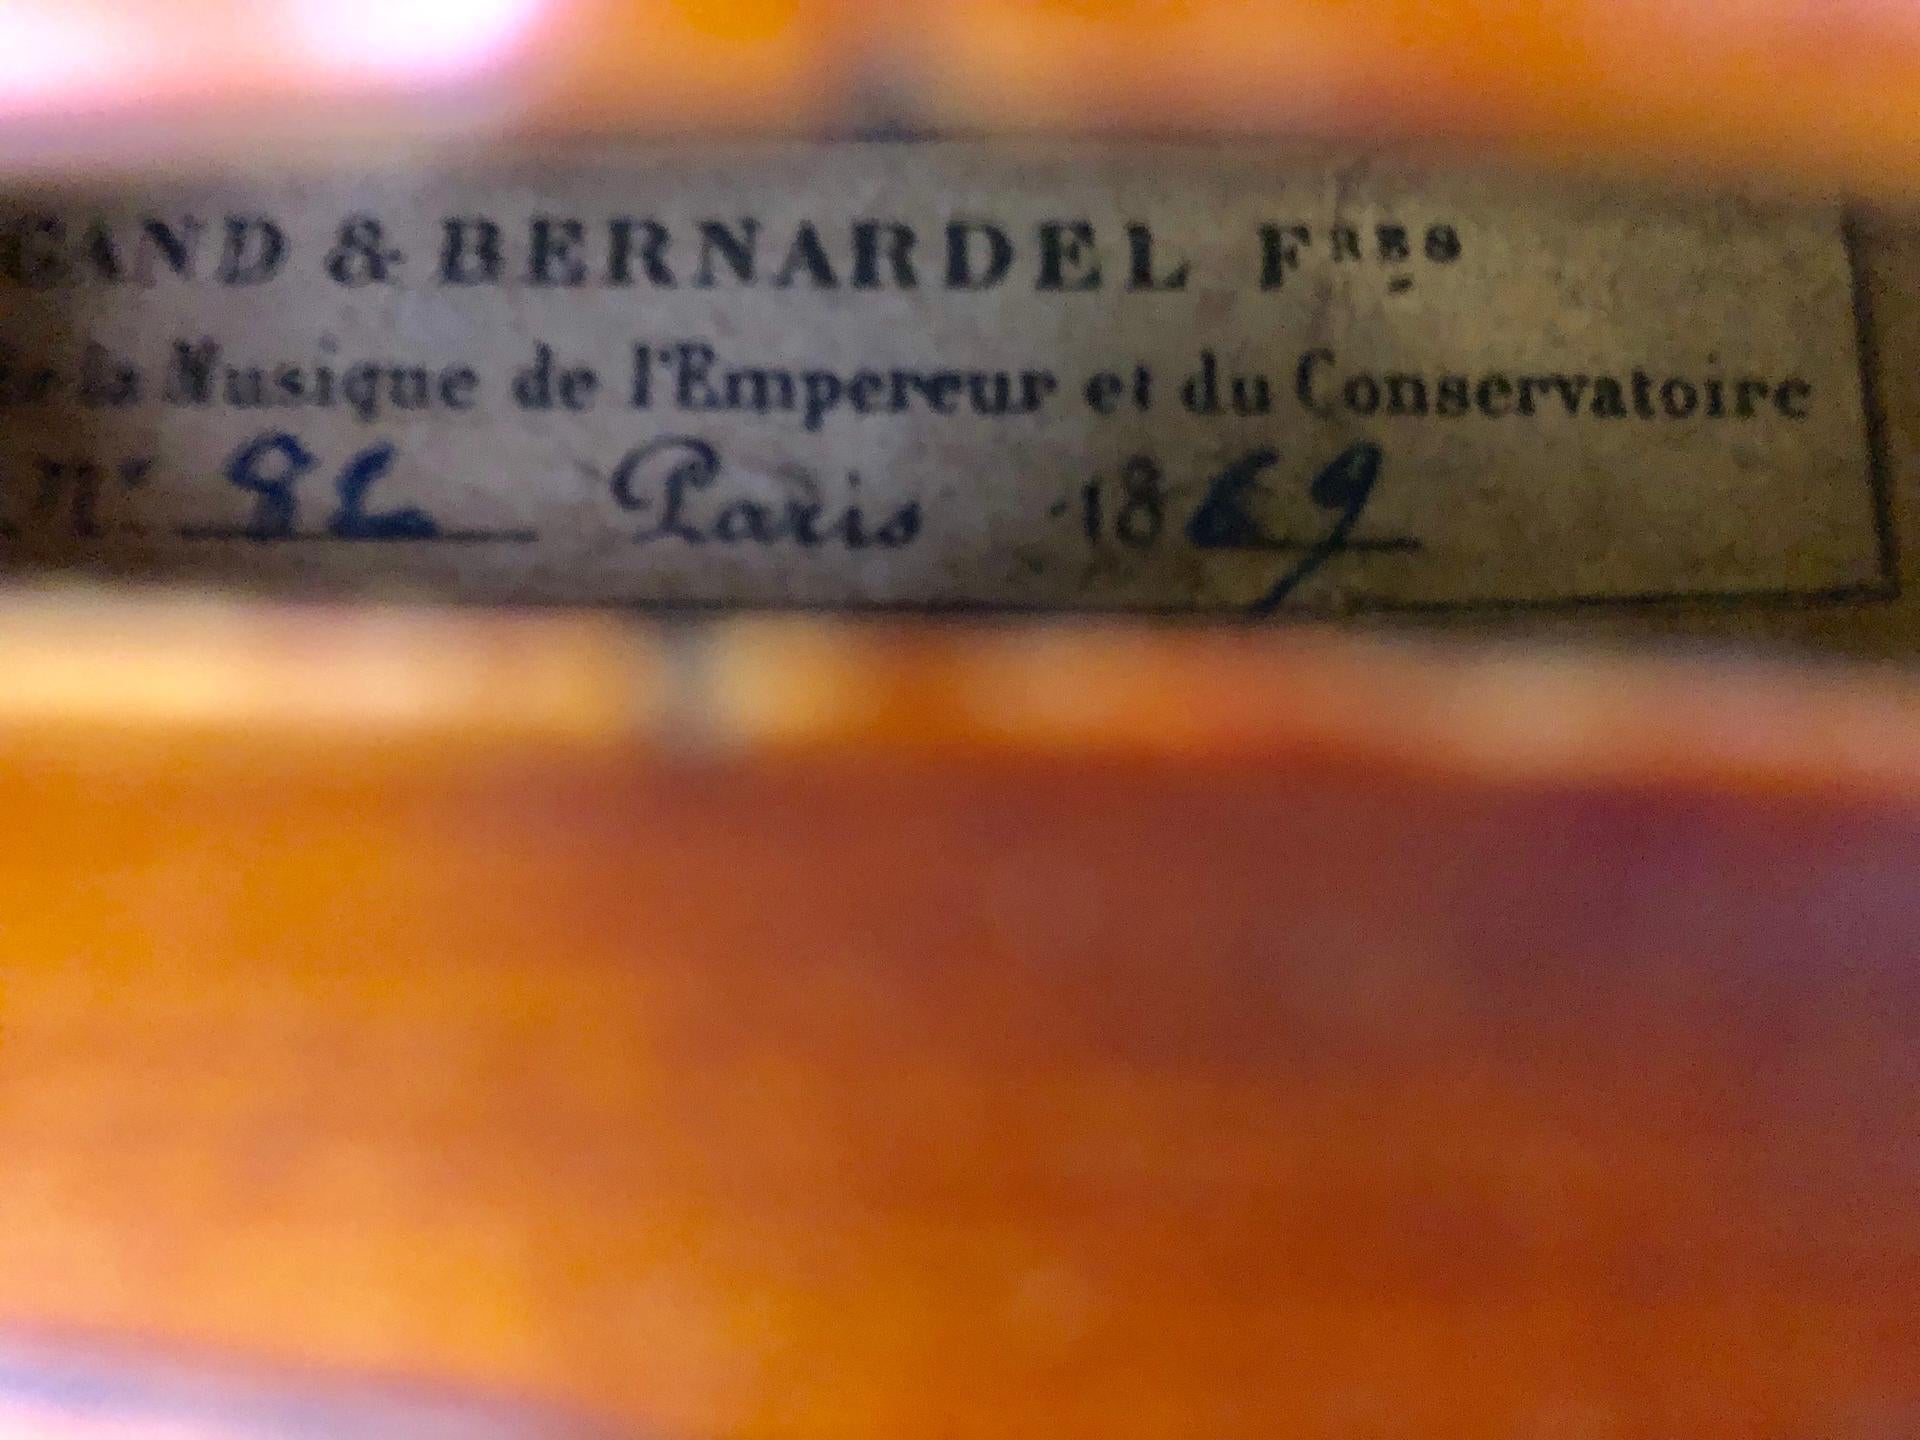 Arts and Crafts French Violin Gand & Bernardel, Paris, 1869